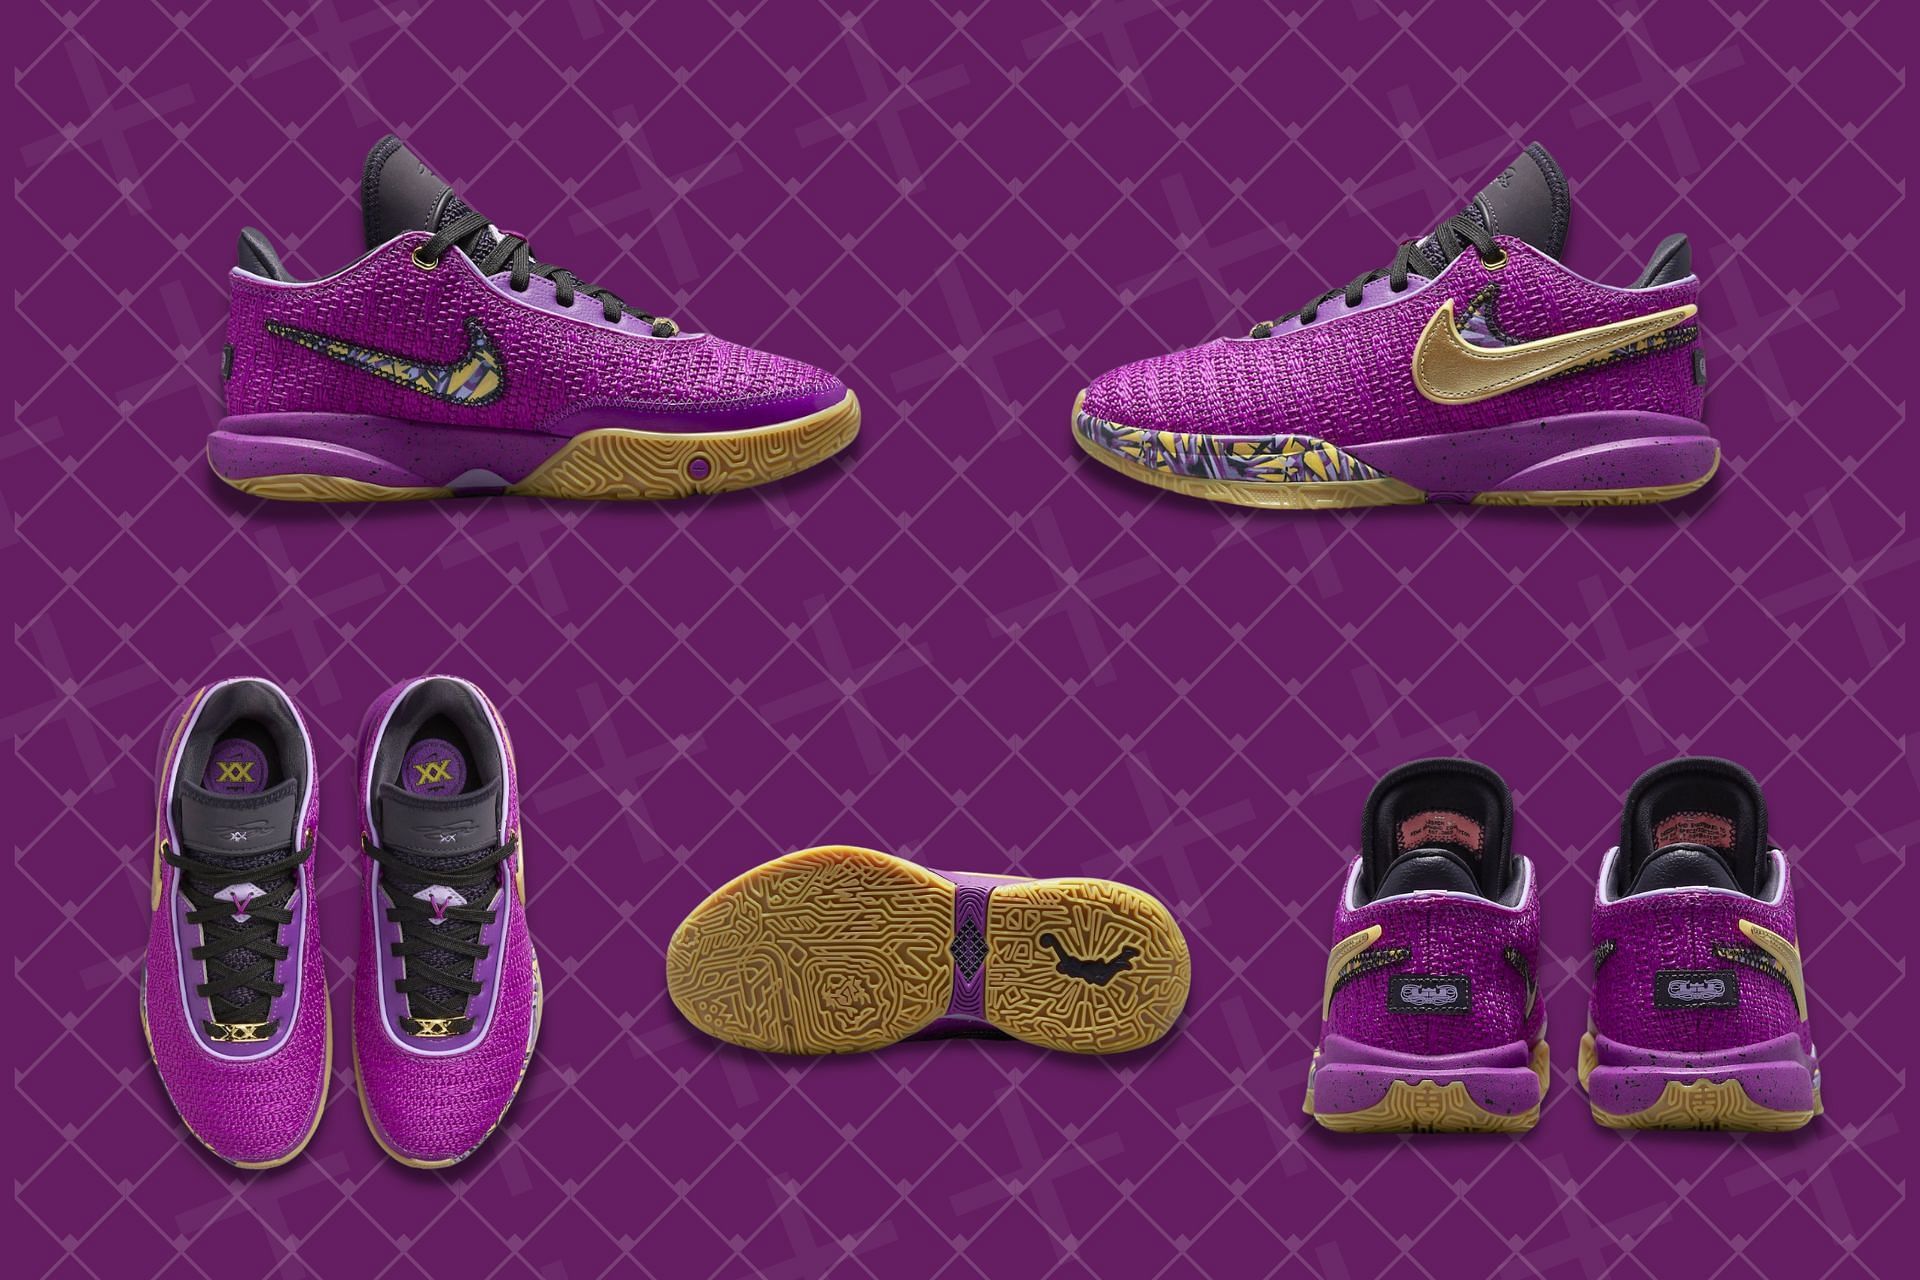 Upcoming Nike LeBron 20 Vivid Purple sneakers (Image via Sportskeeda)